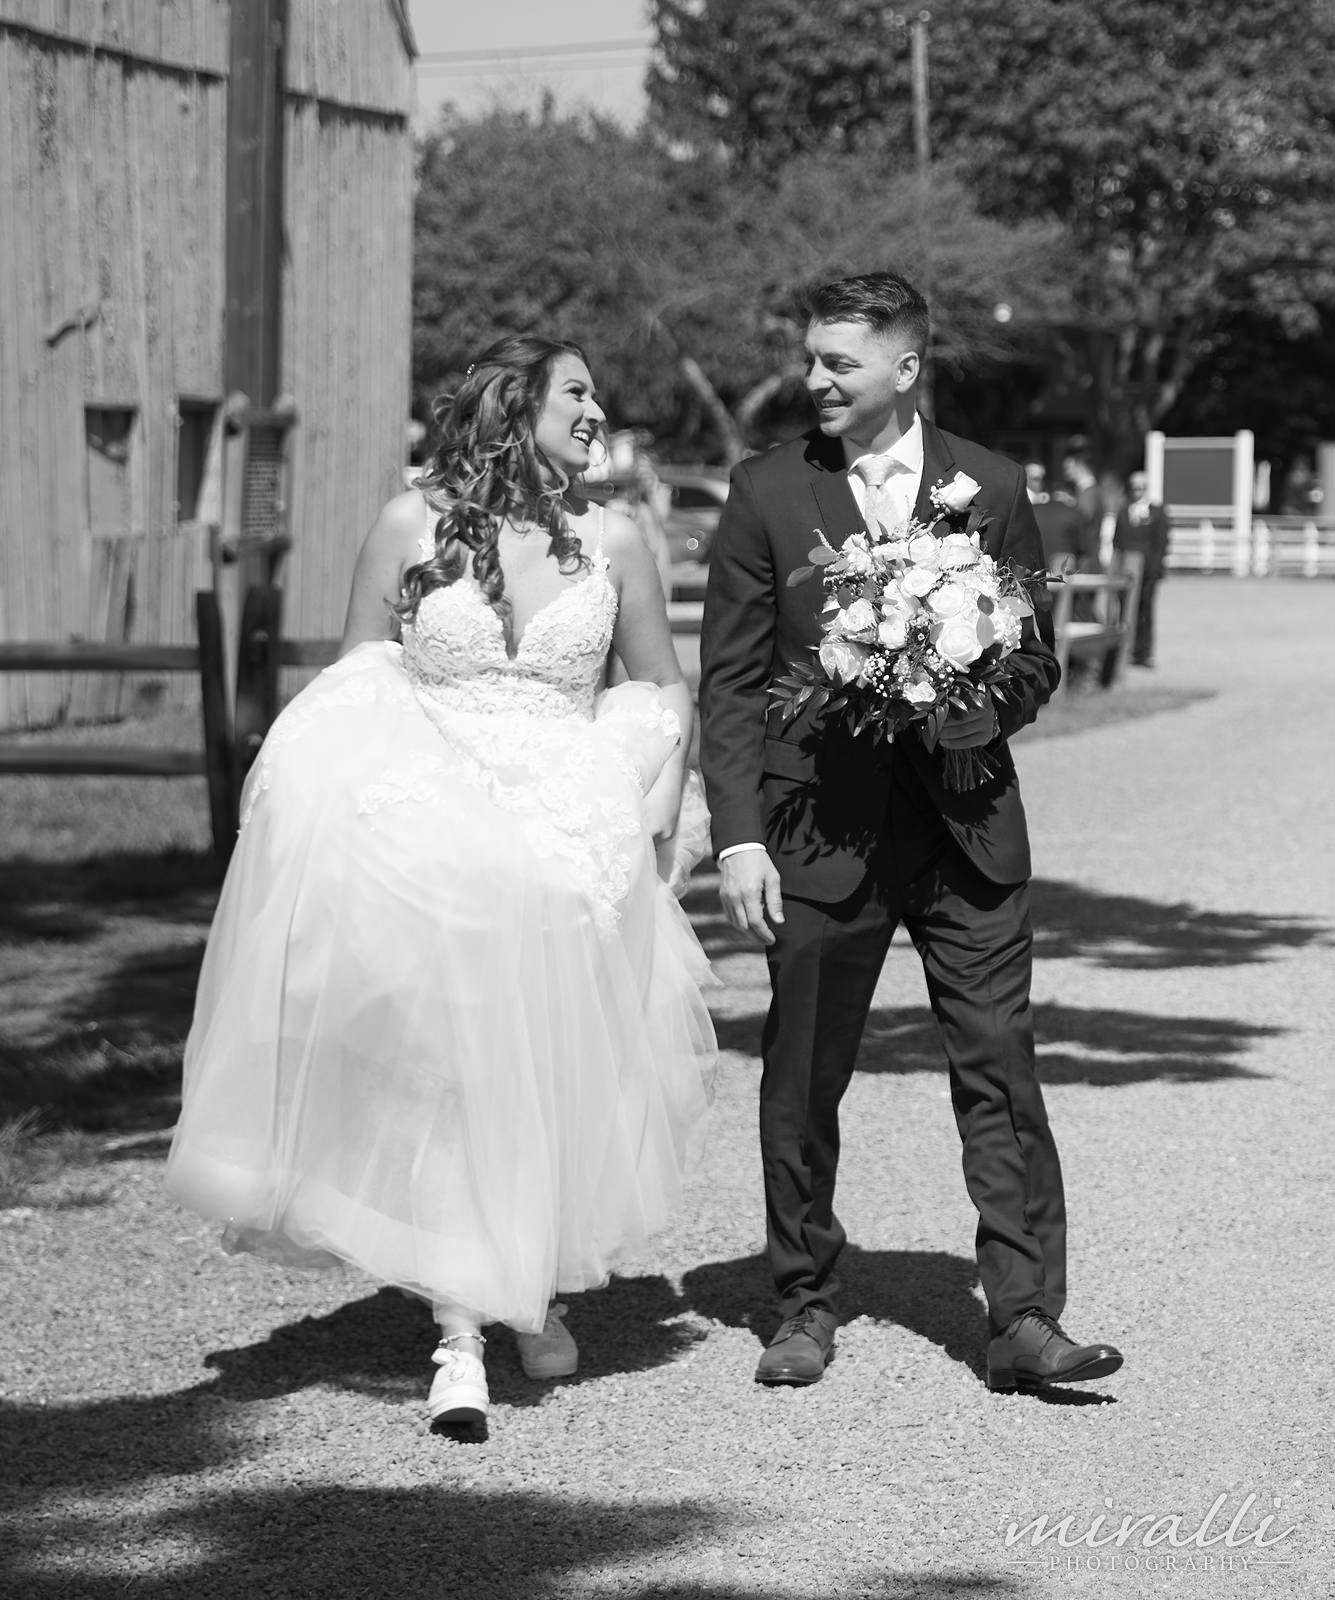 Islip Grange Wedding Photos by Miralli Photography